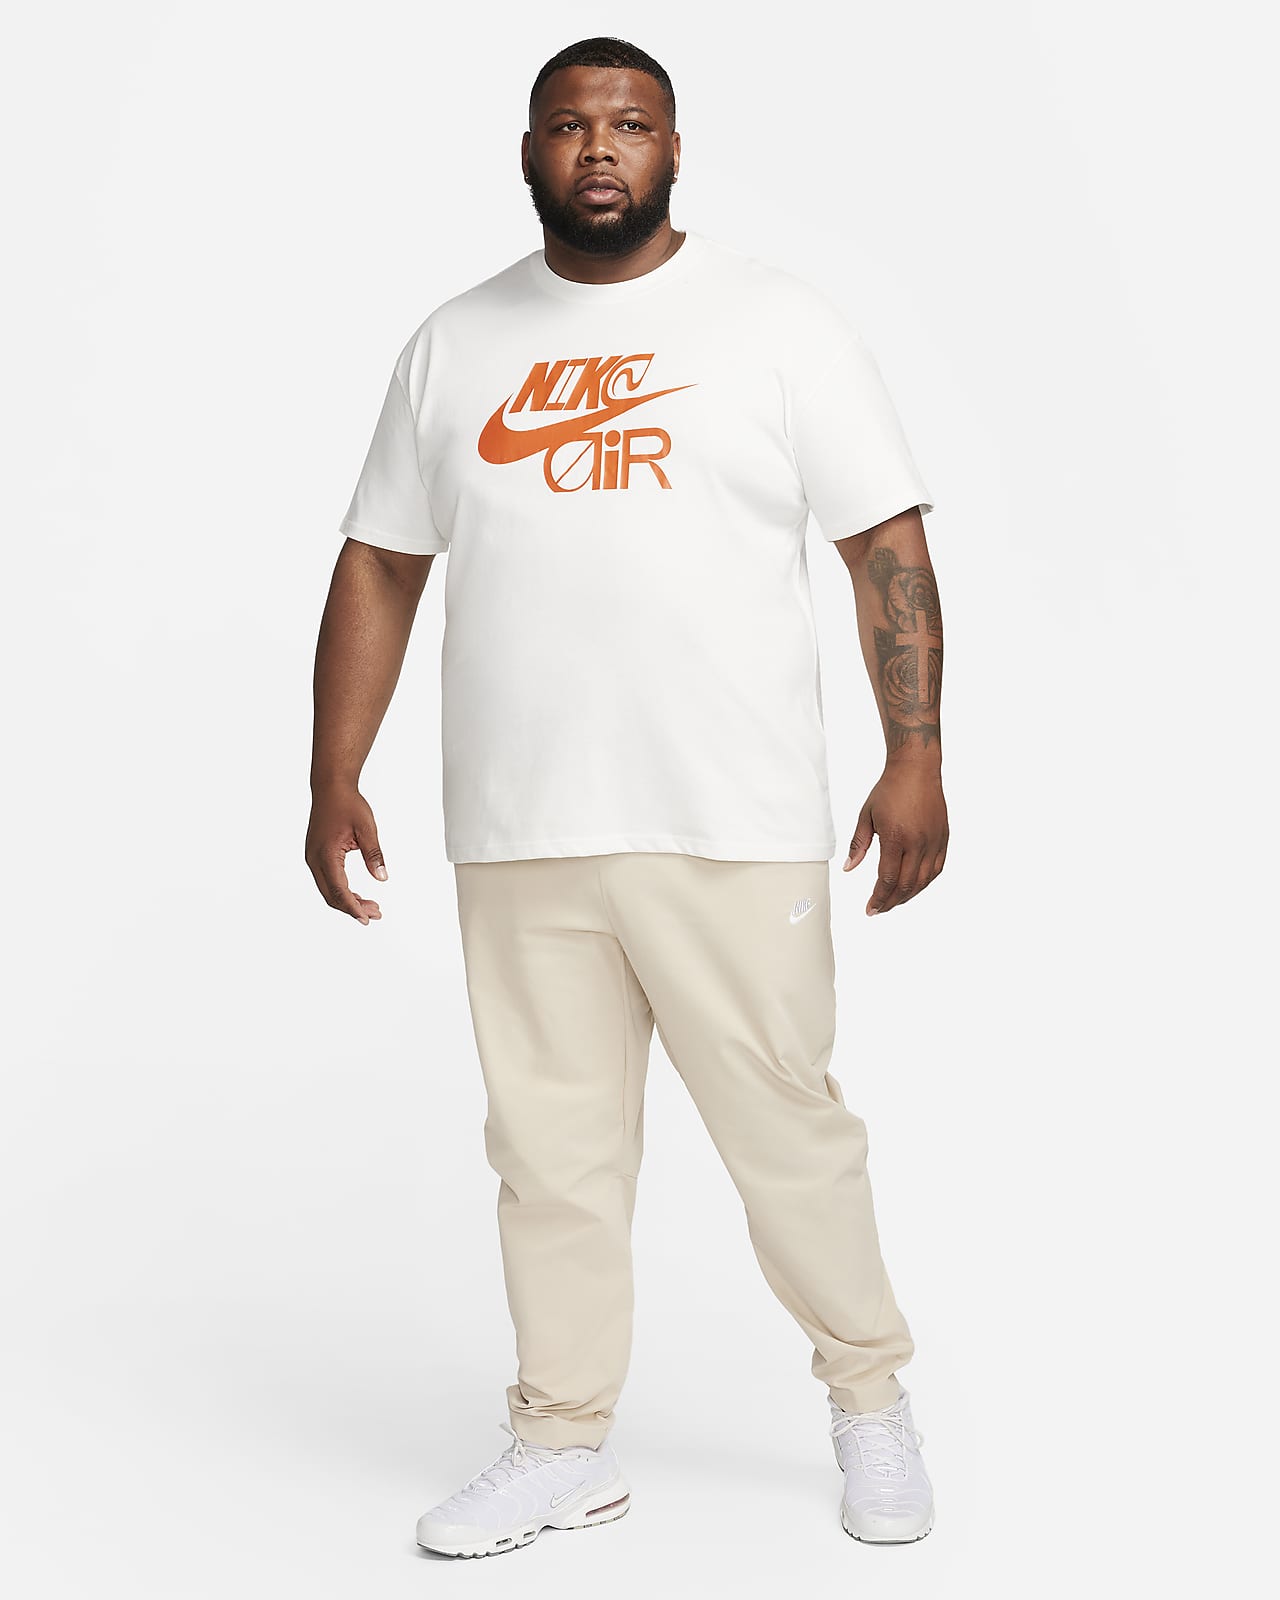 Nike Sportswear Men's Max90 T-Shirt.